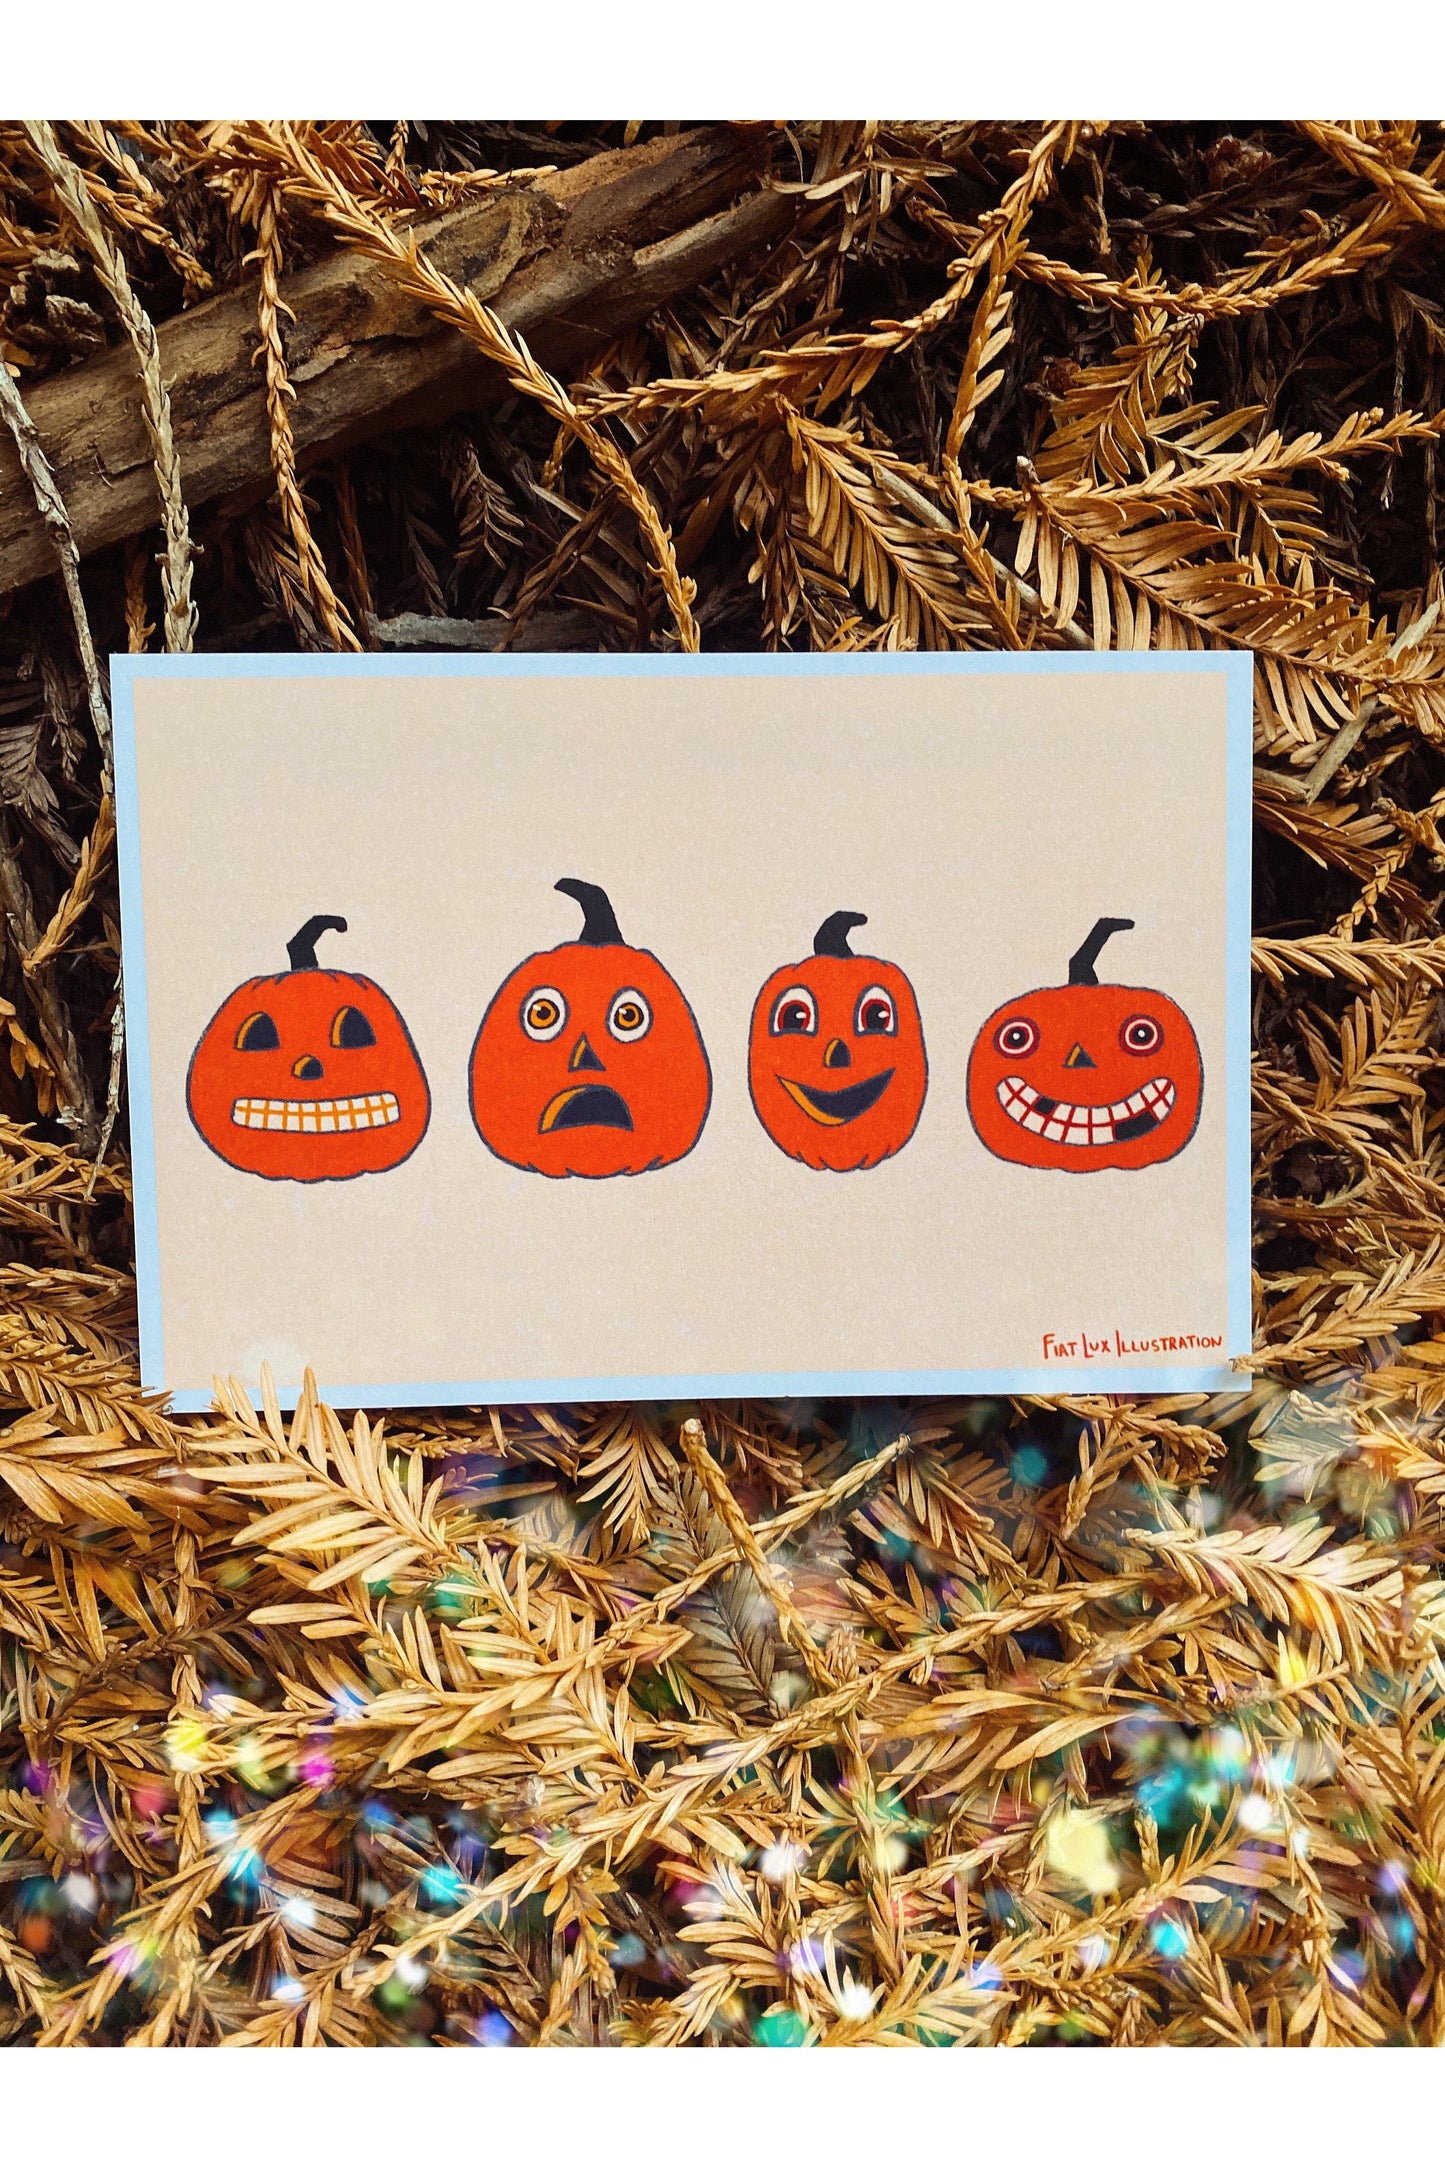 Four Little Pumpkins 4x6 Print Vintage Halloween.